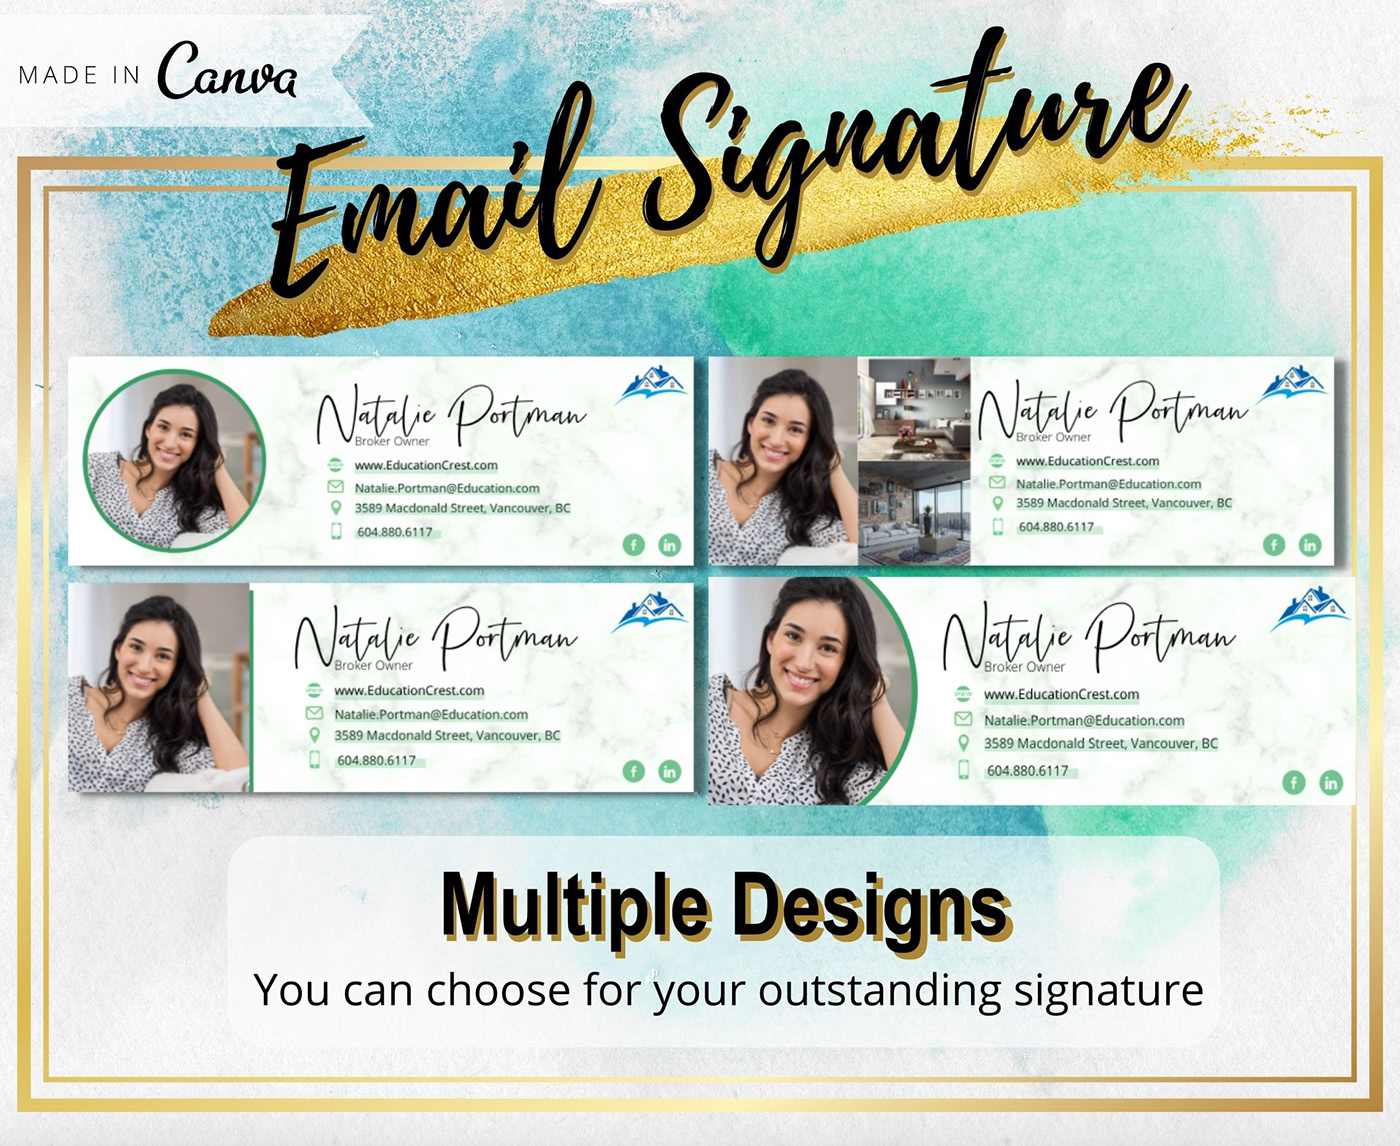 email signature GMail gmail signature Outlook signature